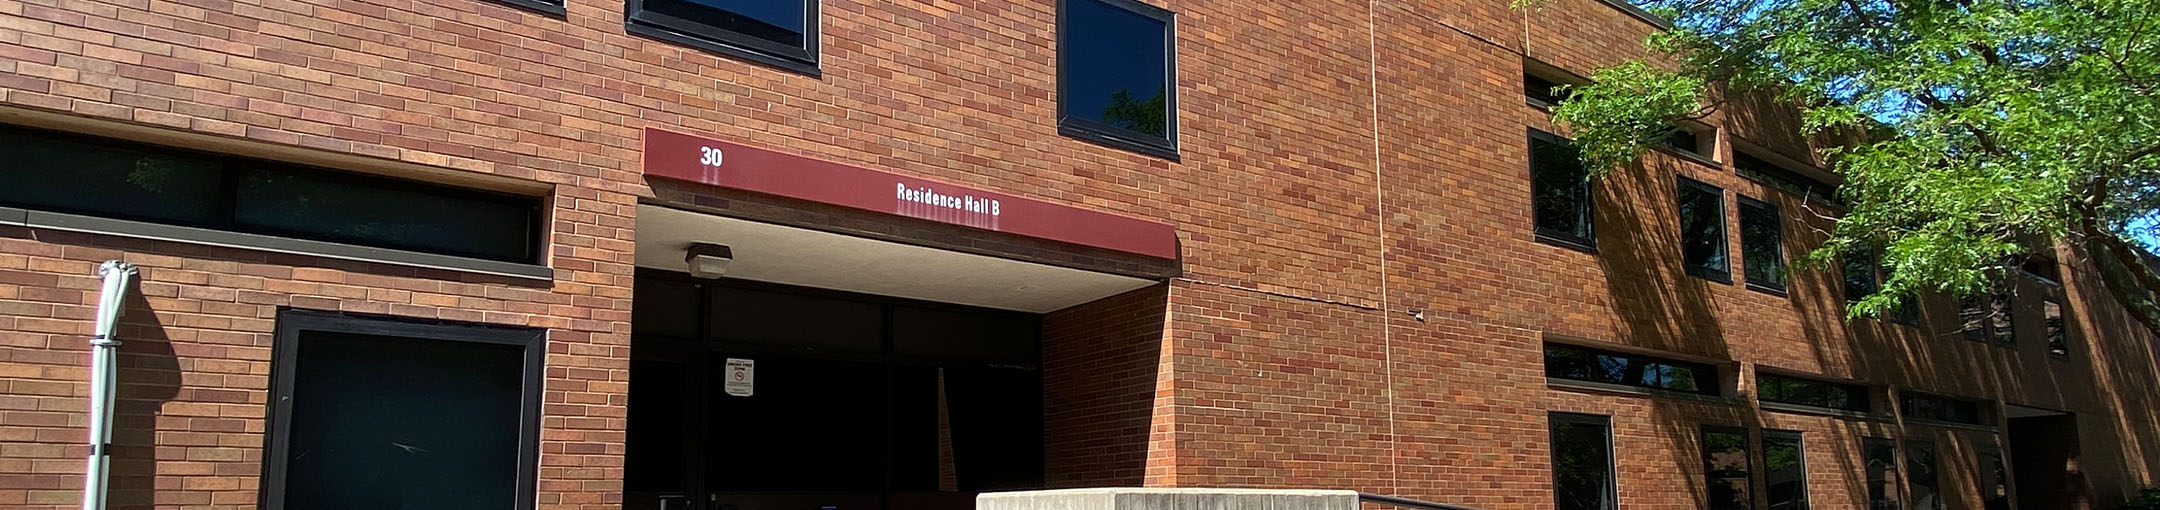 entrance of brick residence hall B